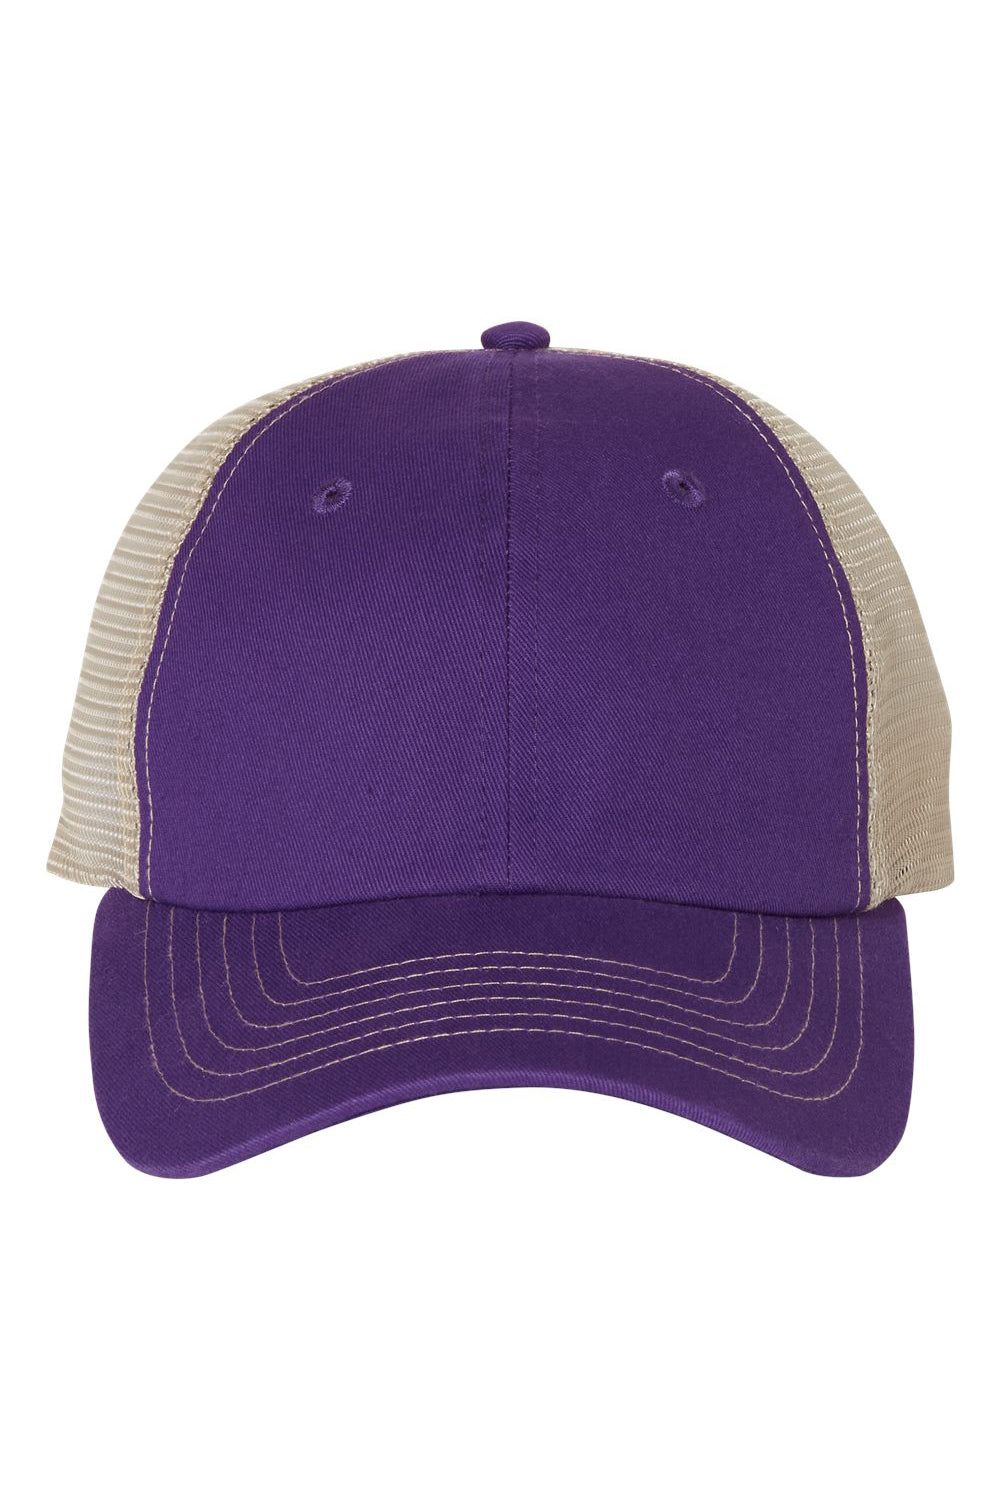 Sportsman 3100 Mens Contrast Stitch Mesh Back Hat Purple/Stone Flat Front